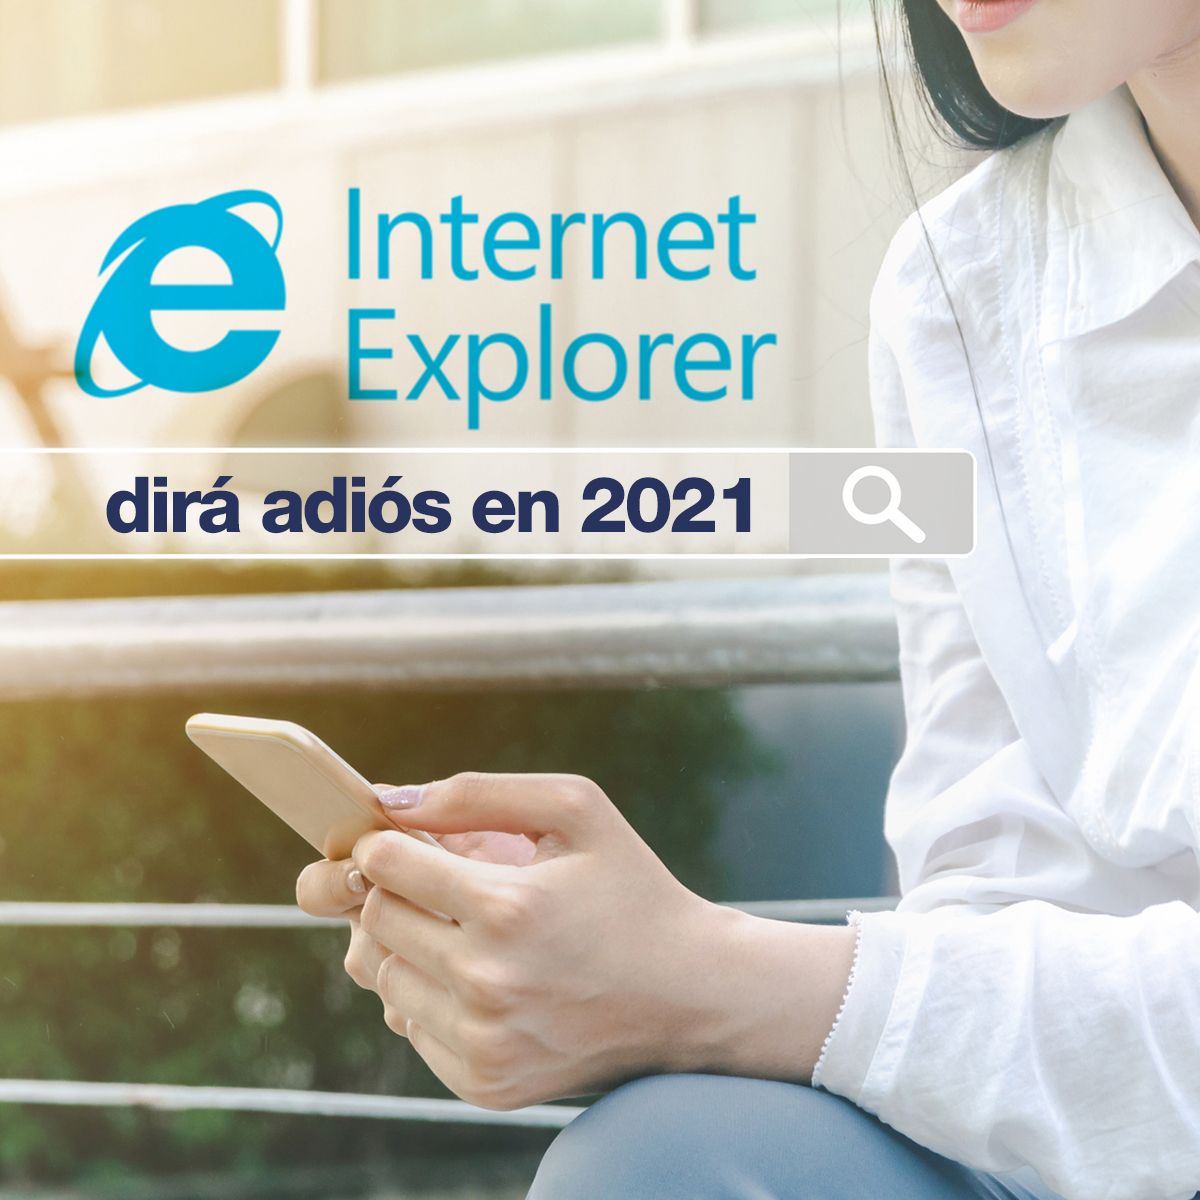 Internet Explorer dirá adiós en 2021